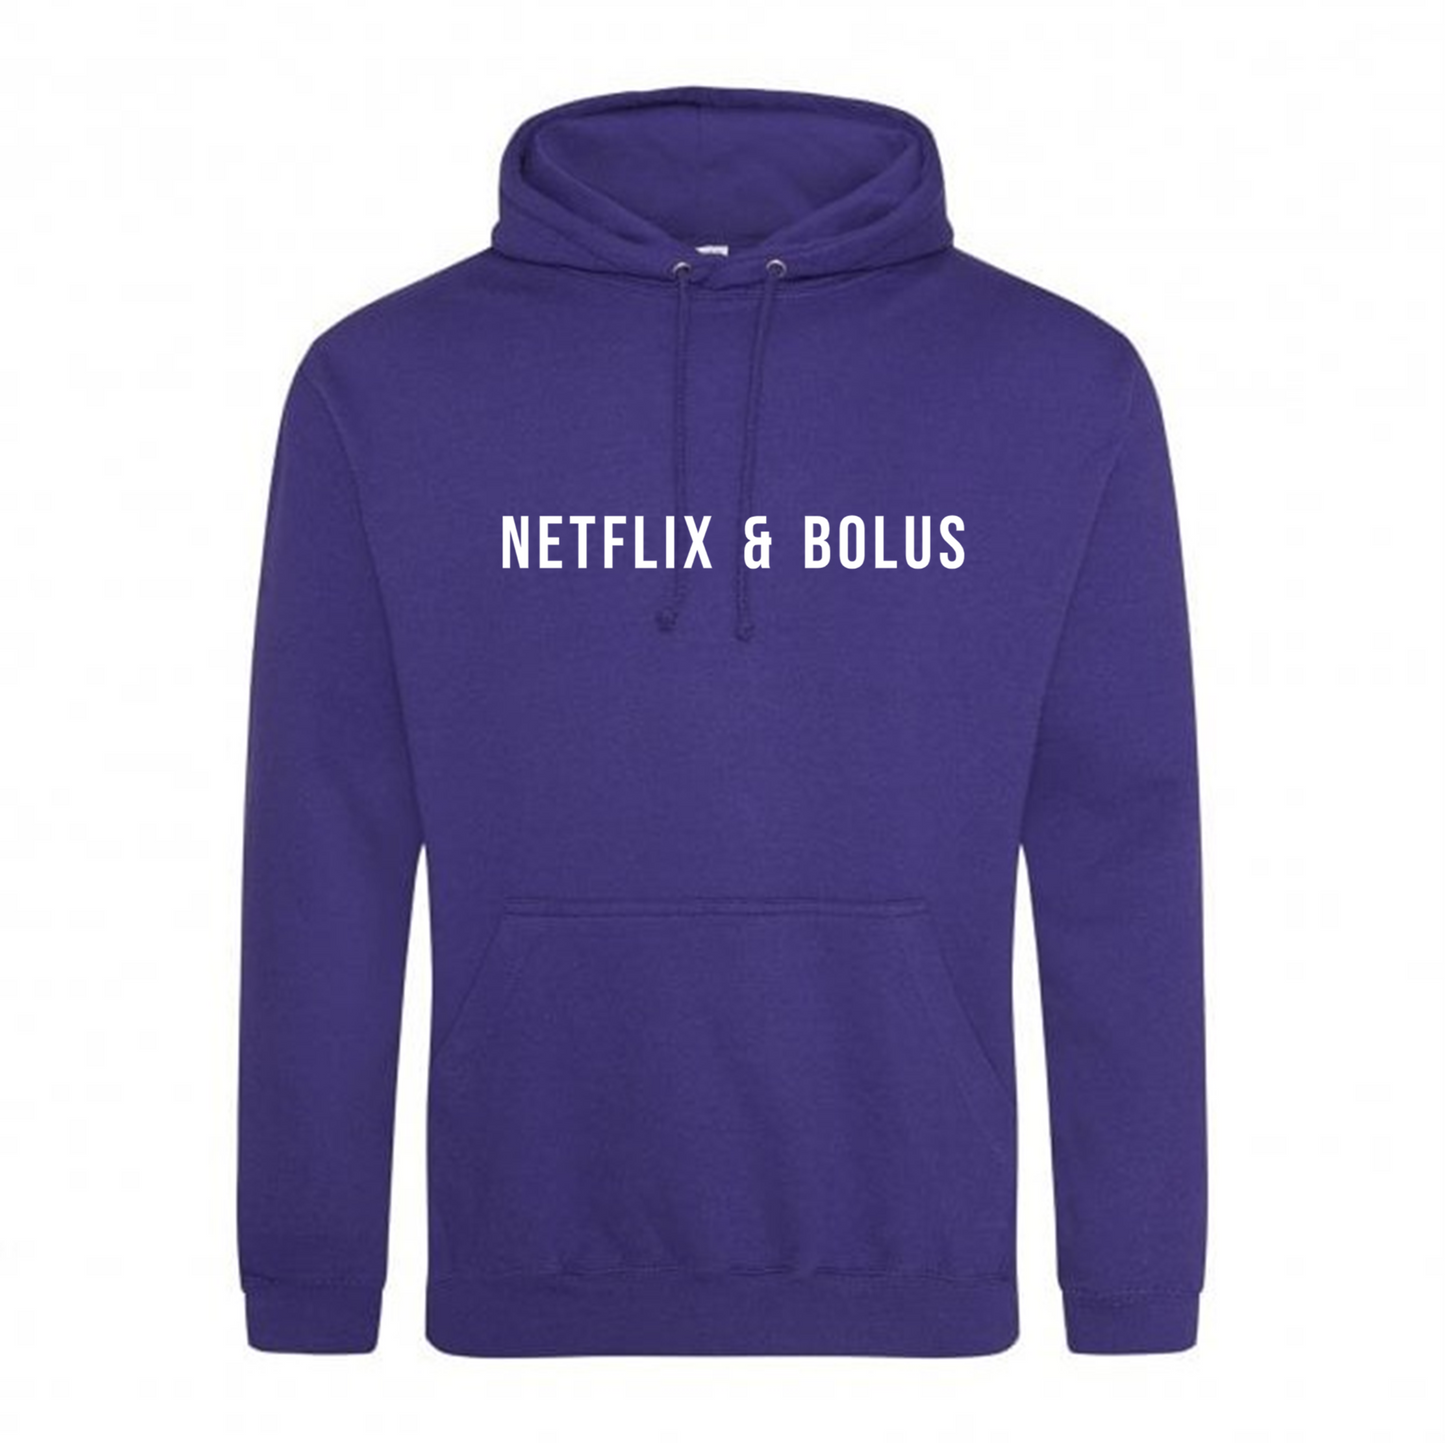 Netflix & Bolus Hoodie